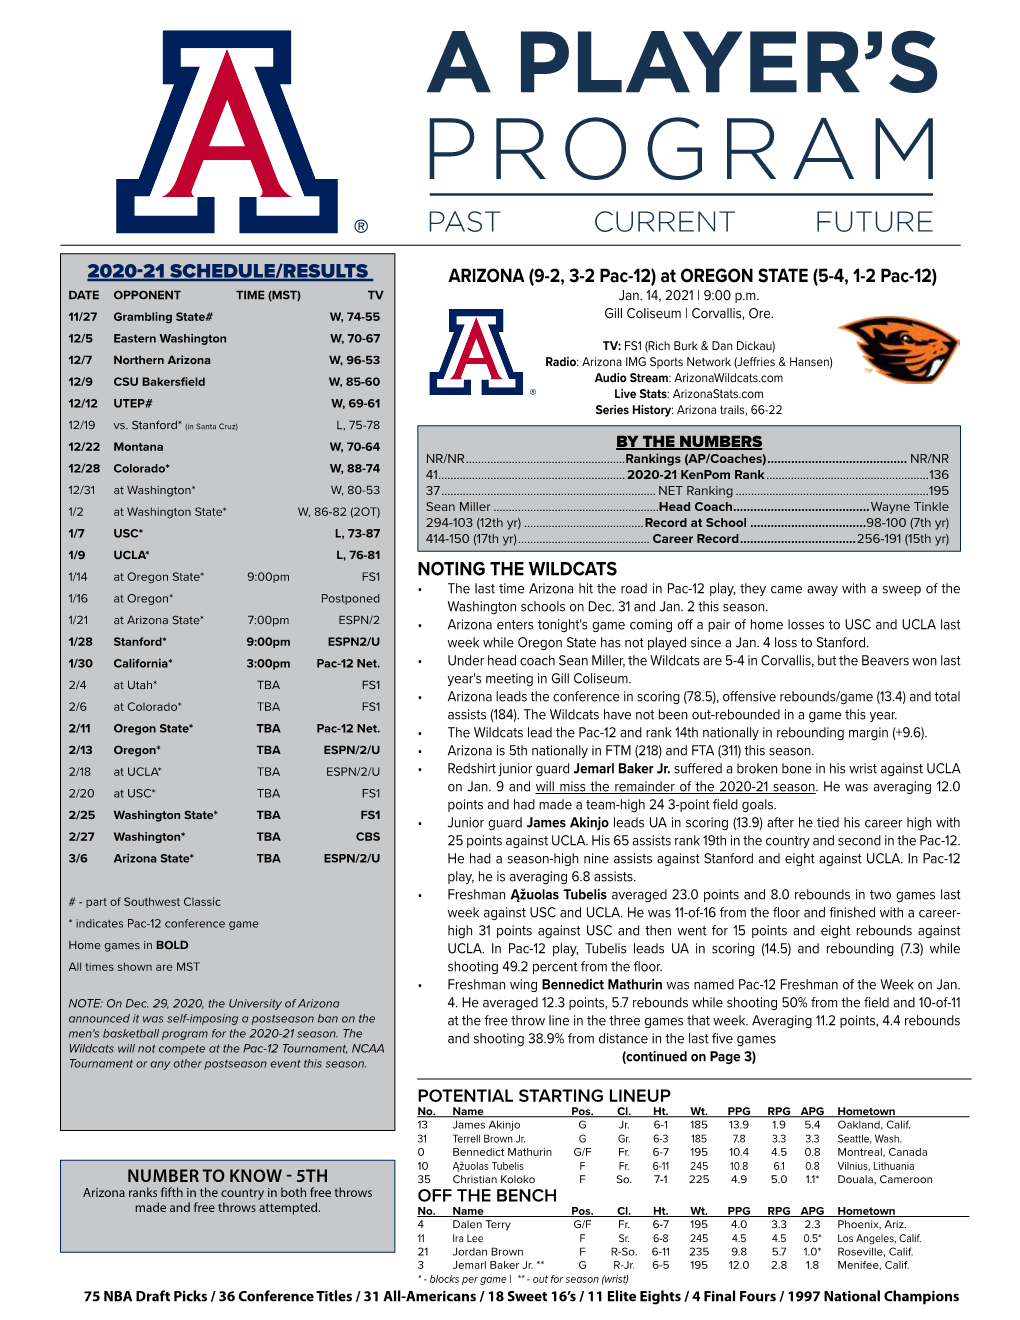 2020-21 Schedule/Results Noting the Wildcats Arizona